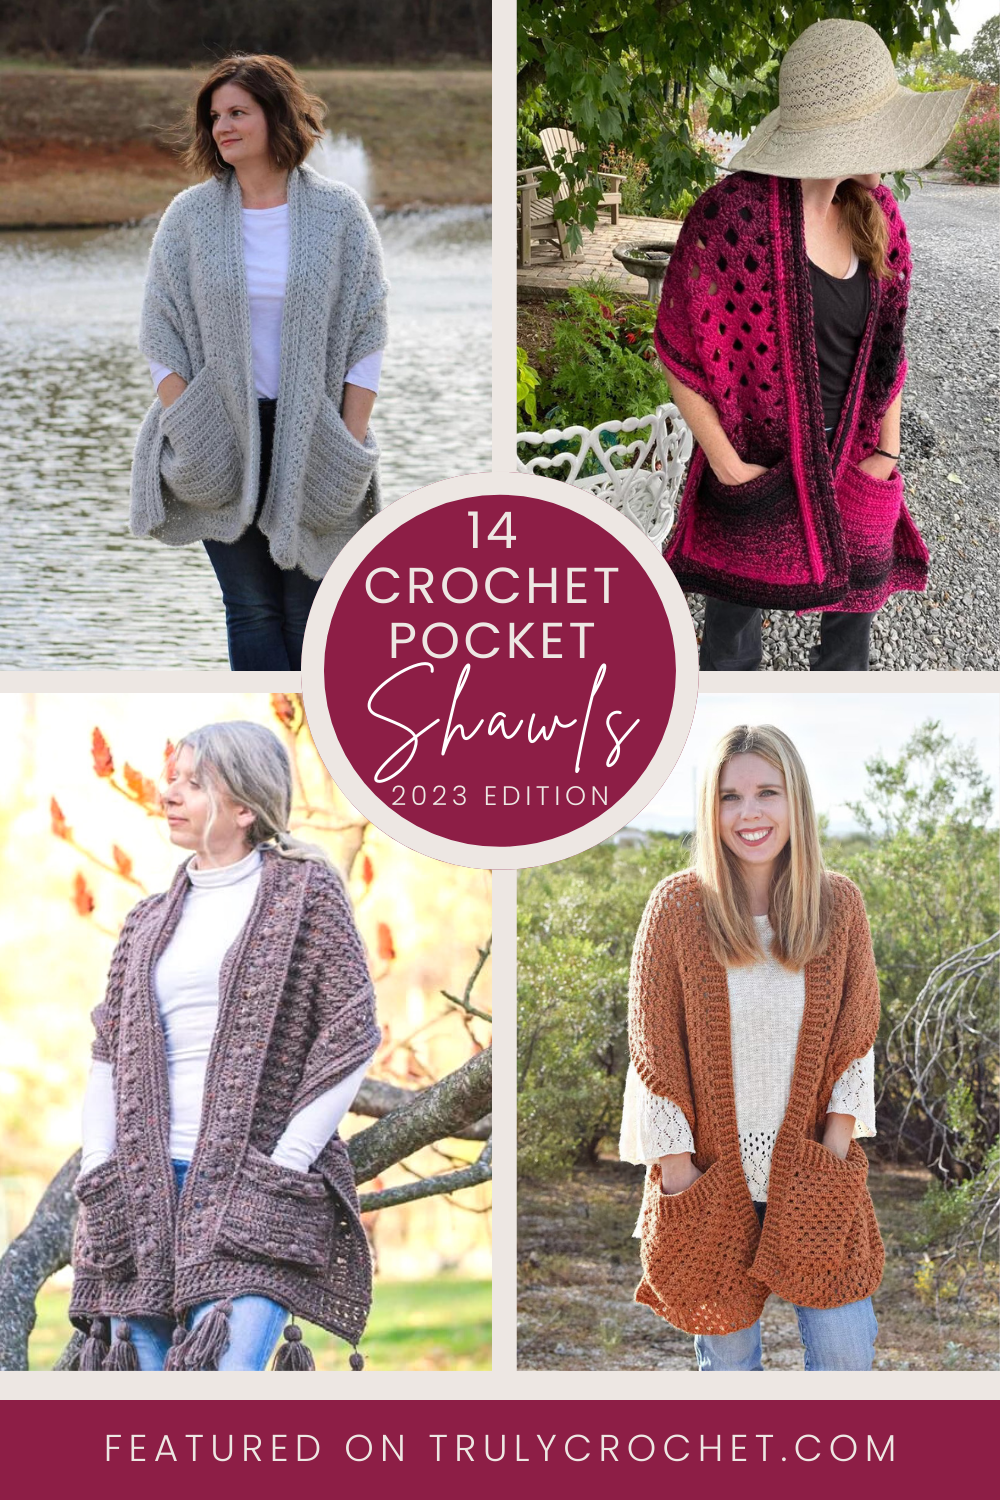 14 crochet pocket shawl patterns - 2023 edition